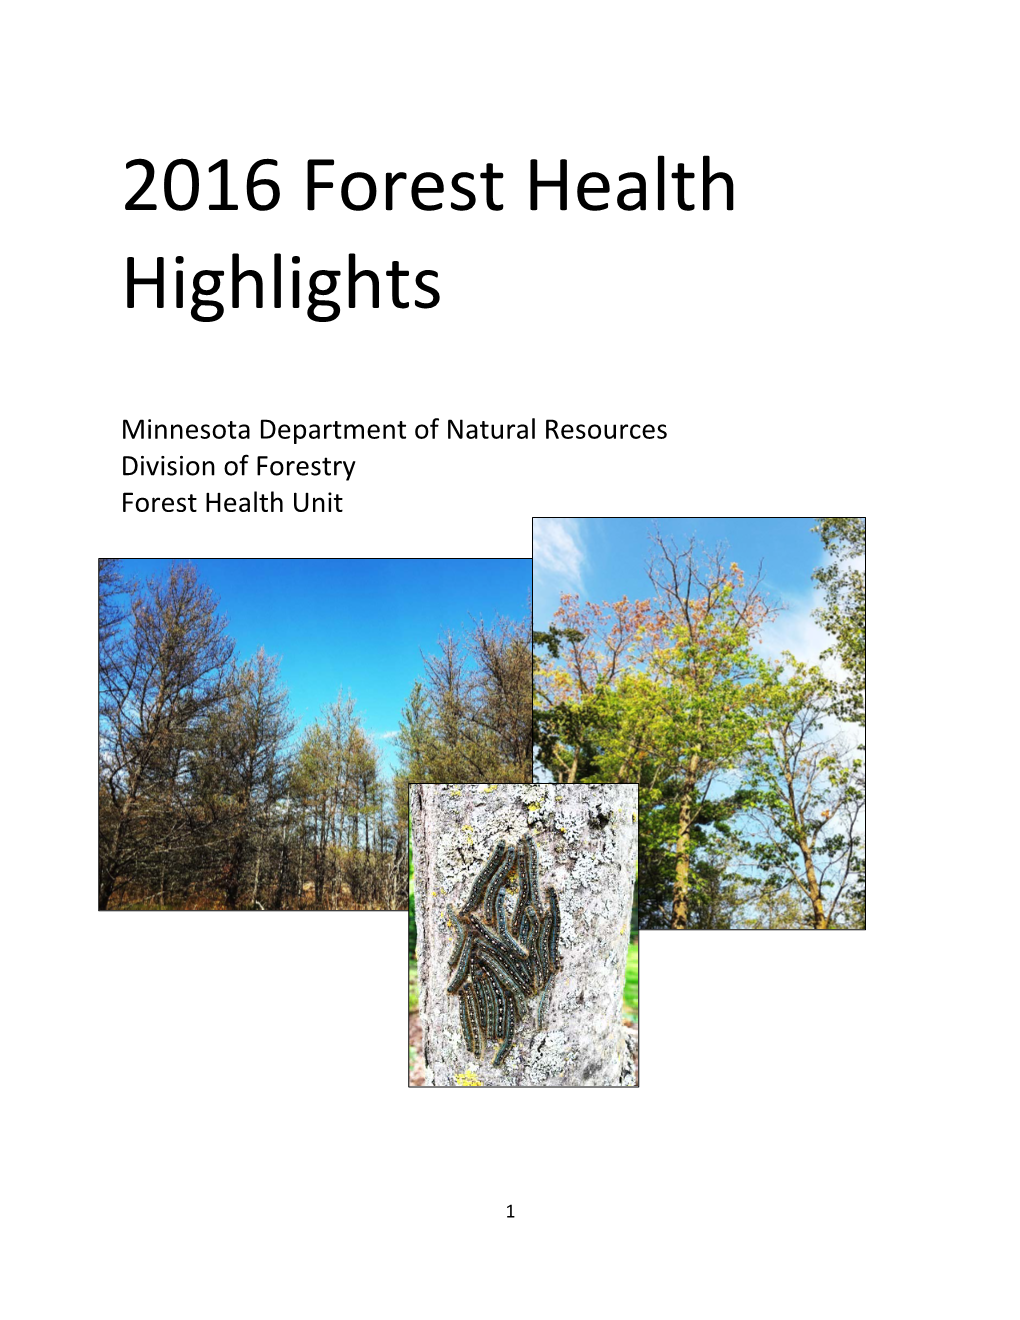 Minnesota 2016 Forest Health Highlights